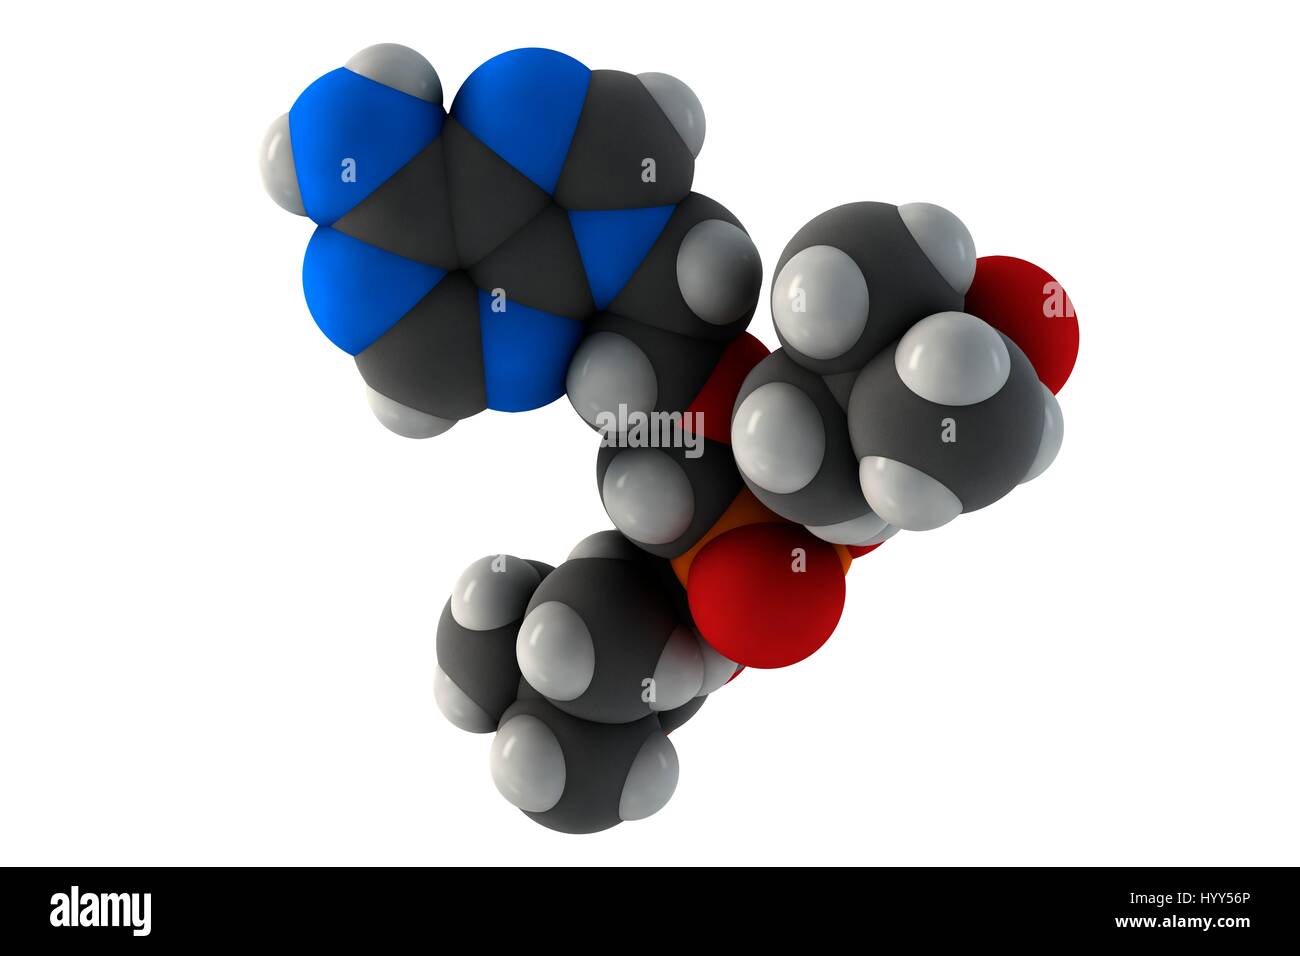 Adefovir hepatitis B and herpes simplex virus (HSV) drug molecule. Chemical formula is C20H32N5O8P. Atoms are represented as spheres: carbon (grey), hydrogen (white), nitrogen (blue), oxygen (red), phosphorus (orange). Illustration. Stock Photo